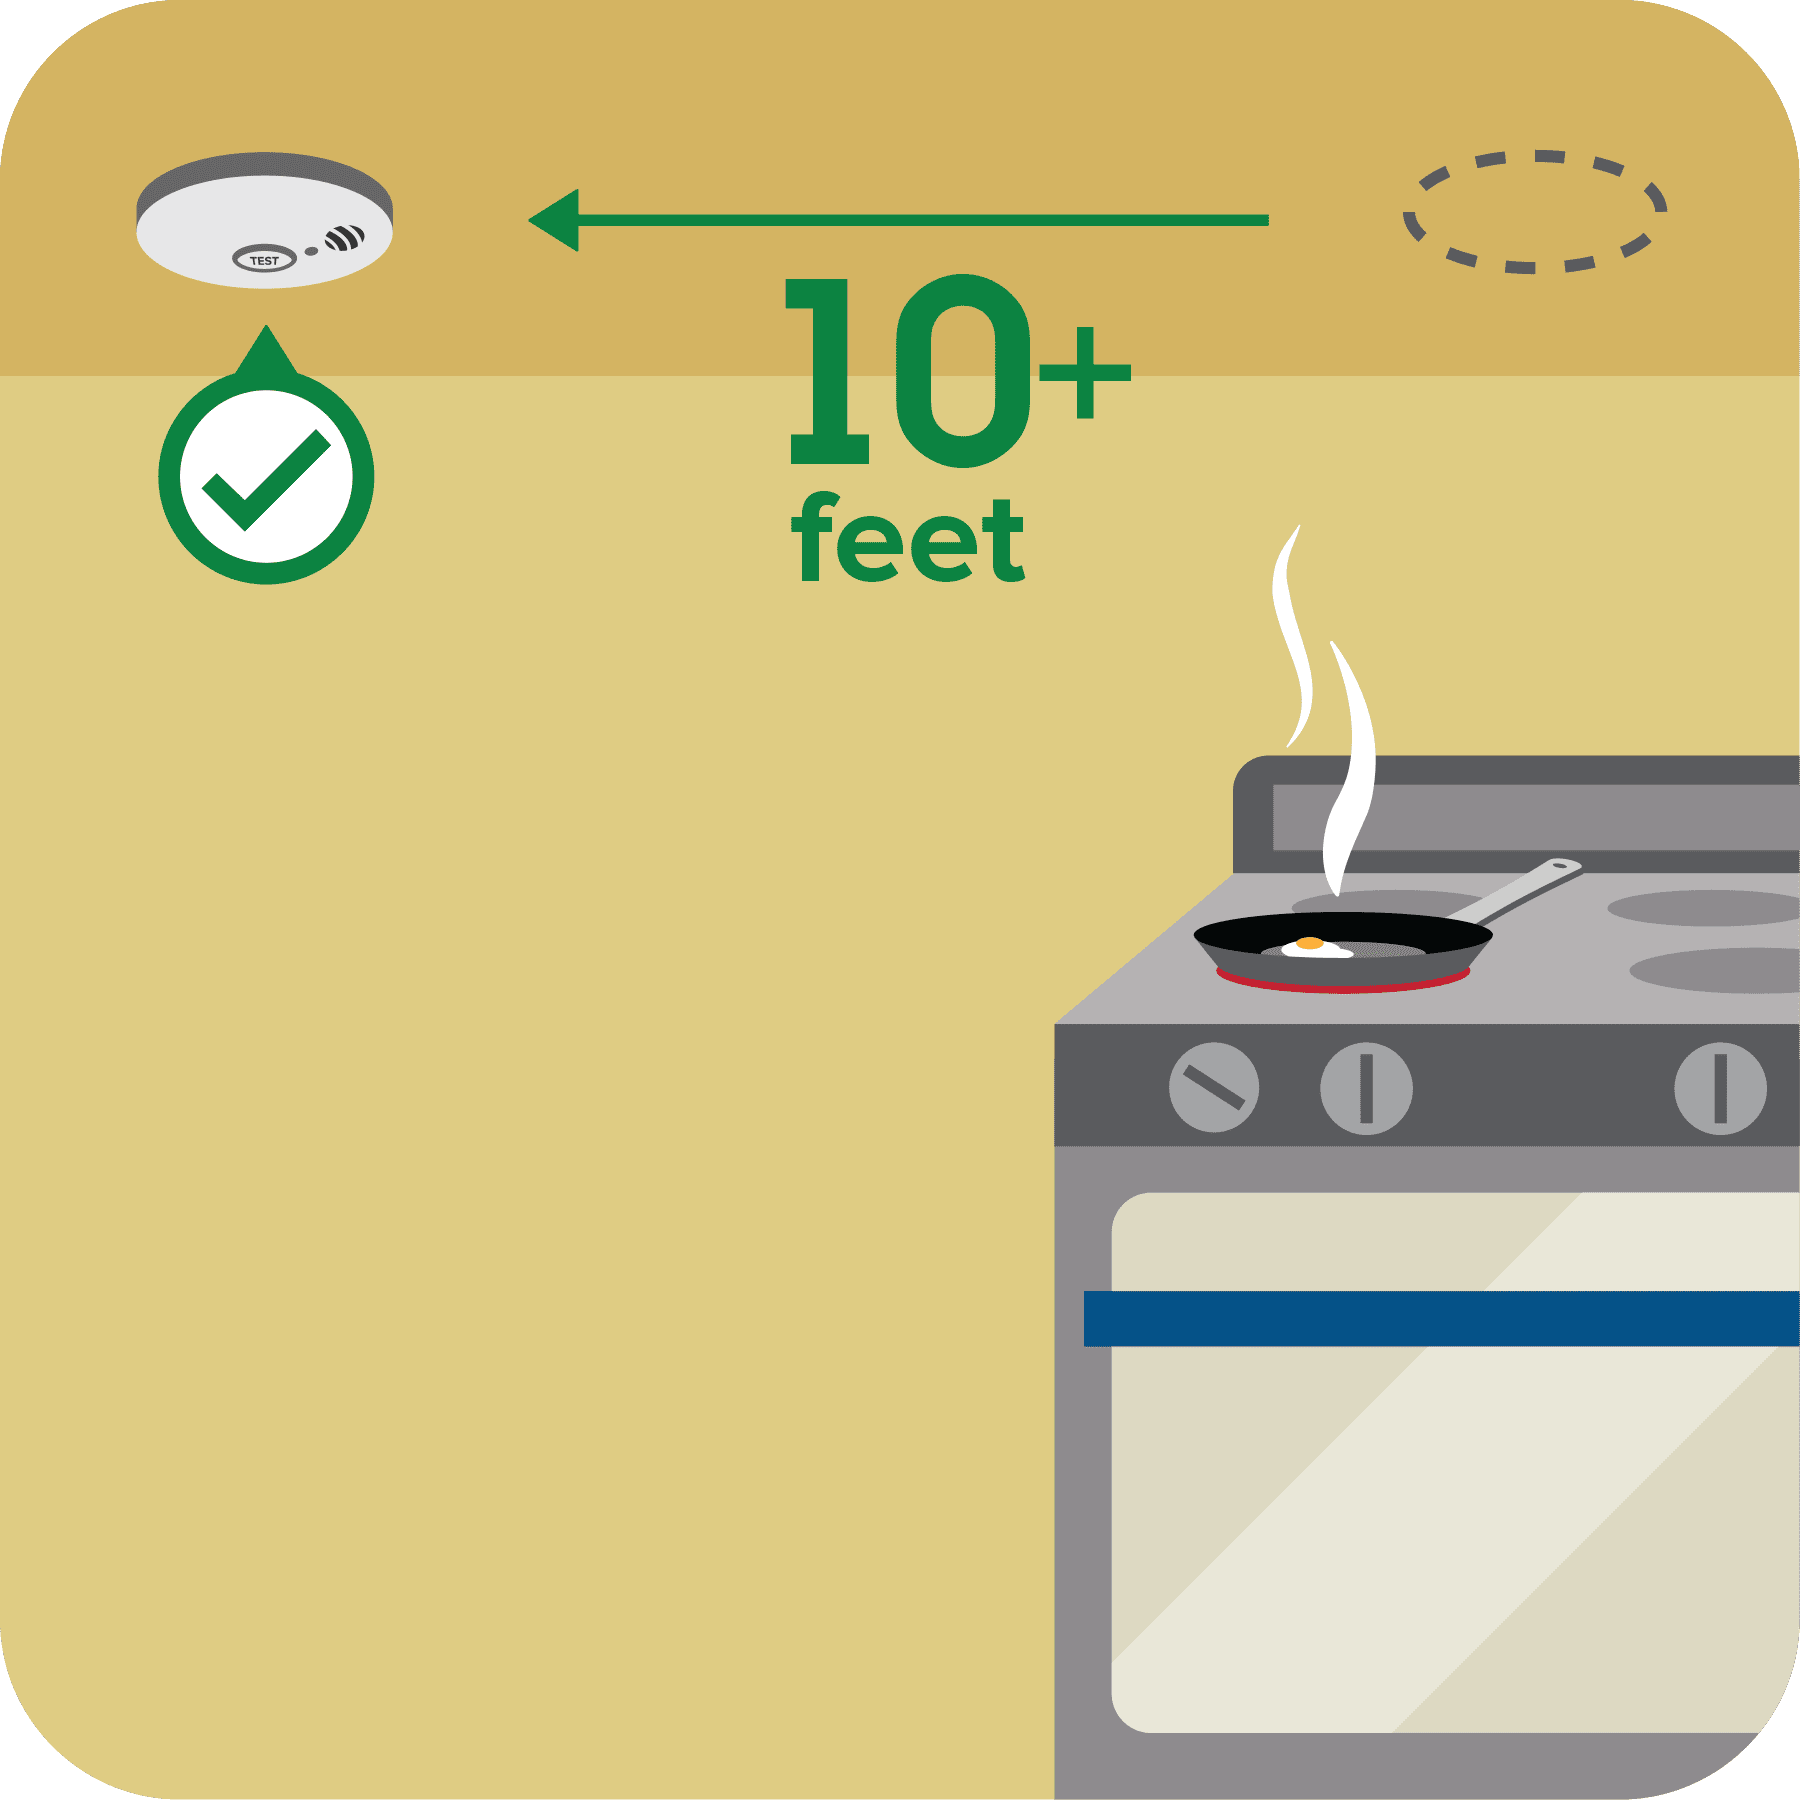 keep 10 feet between smoke detector and stove